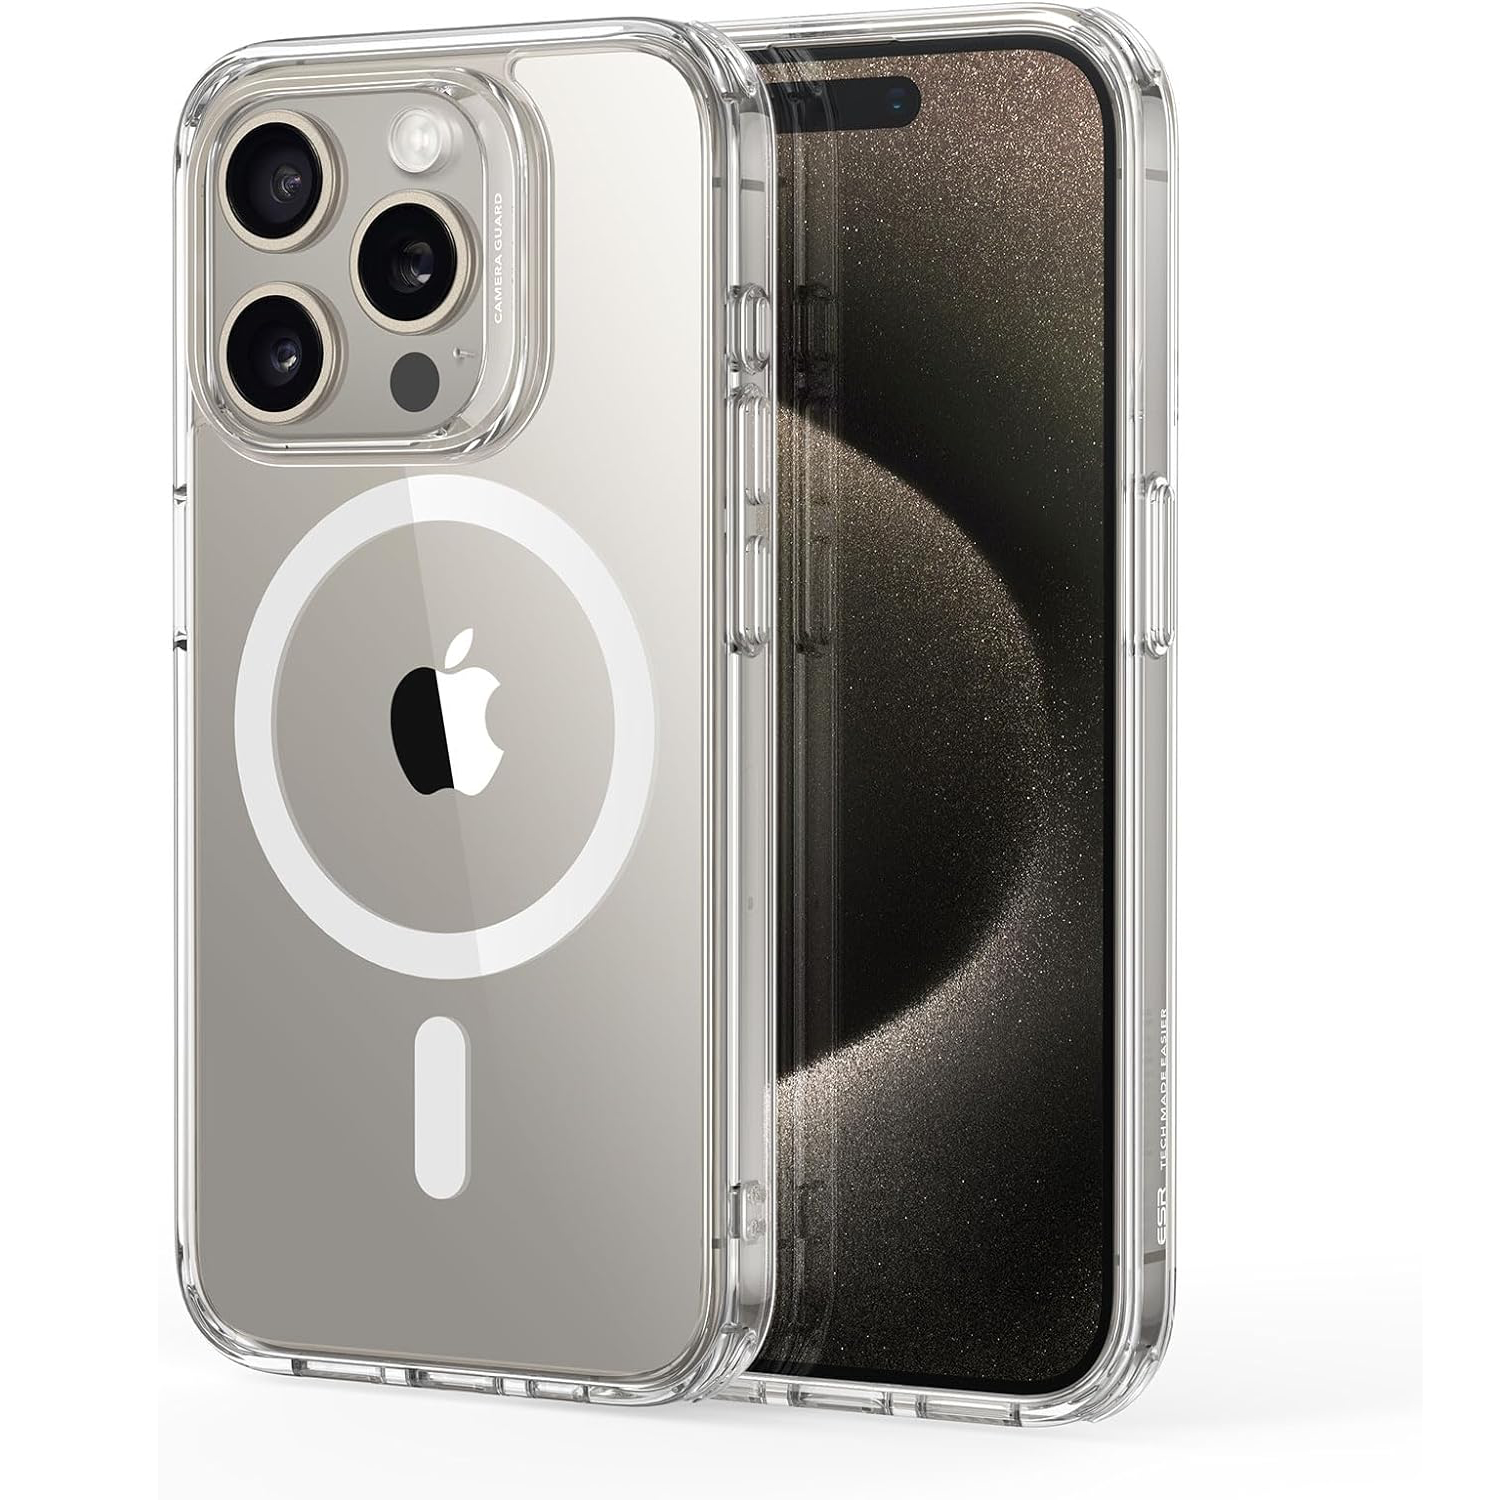 iPhone 15 Pro Max ESR Classic Hybrid Case Halolock Magsafe